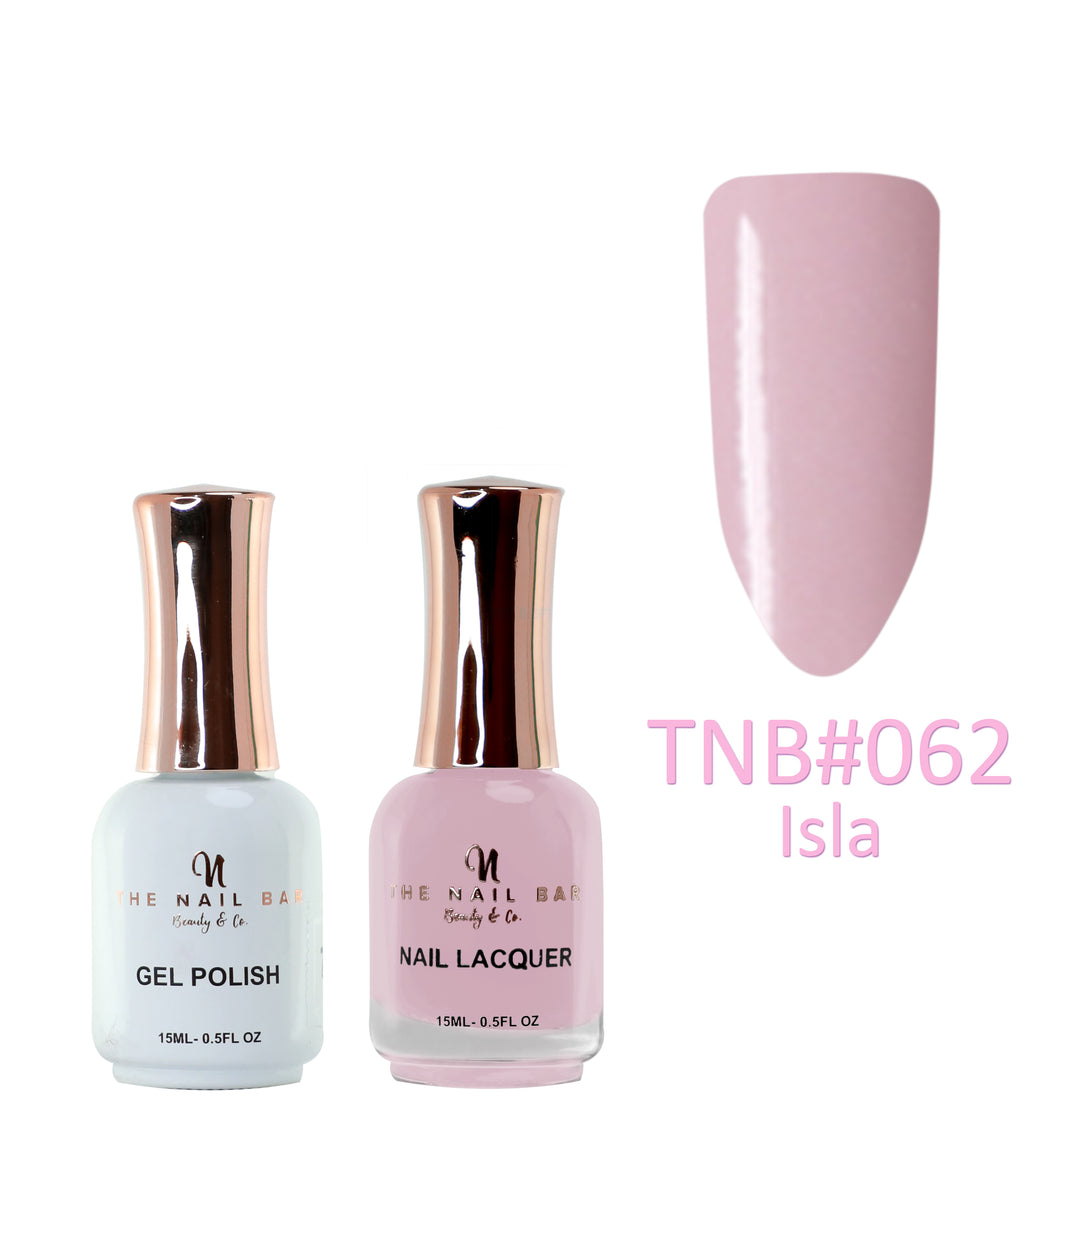 Dual Polish/Gel colour matching (15ml) - Isla - The Nail Bar Beauty & Co.